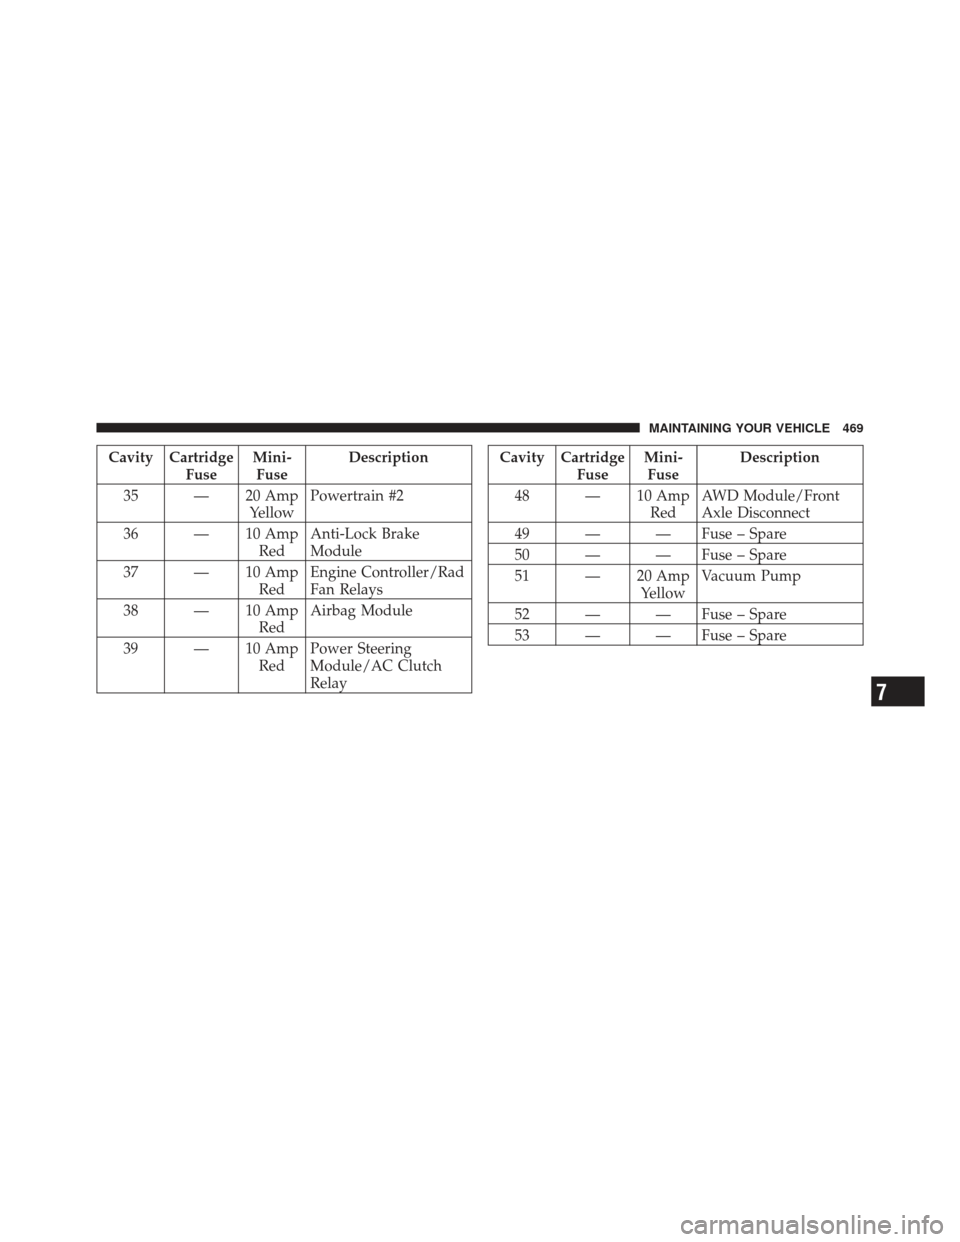 CHRYSLER 300 2011 2.G Owners Manual Cavity CartridgeFuseMini-
Fuse Description
35 — 20 Amp YellowPowertrain #2
36 — 10 Amp RedAnti-Lock Brake
Module
37 — 10 Amp RedEngine Controller/Rad
Fan Relays
38 — 10 Amp RedAirbag Module
39